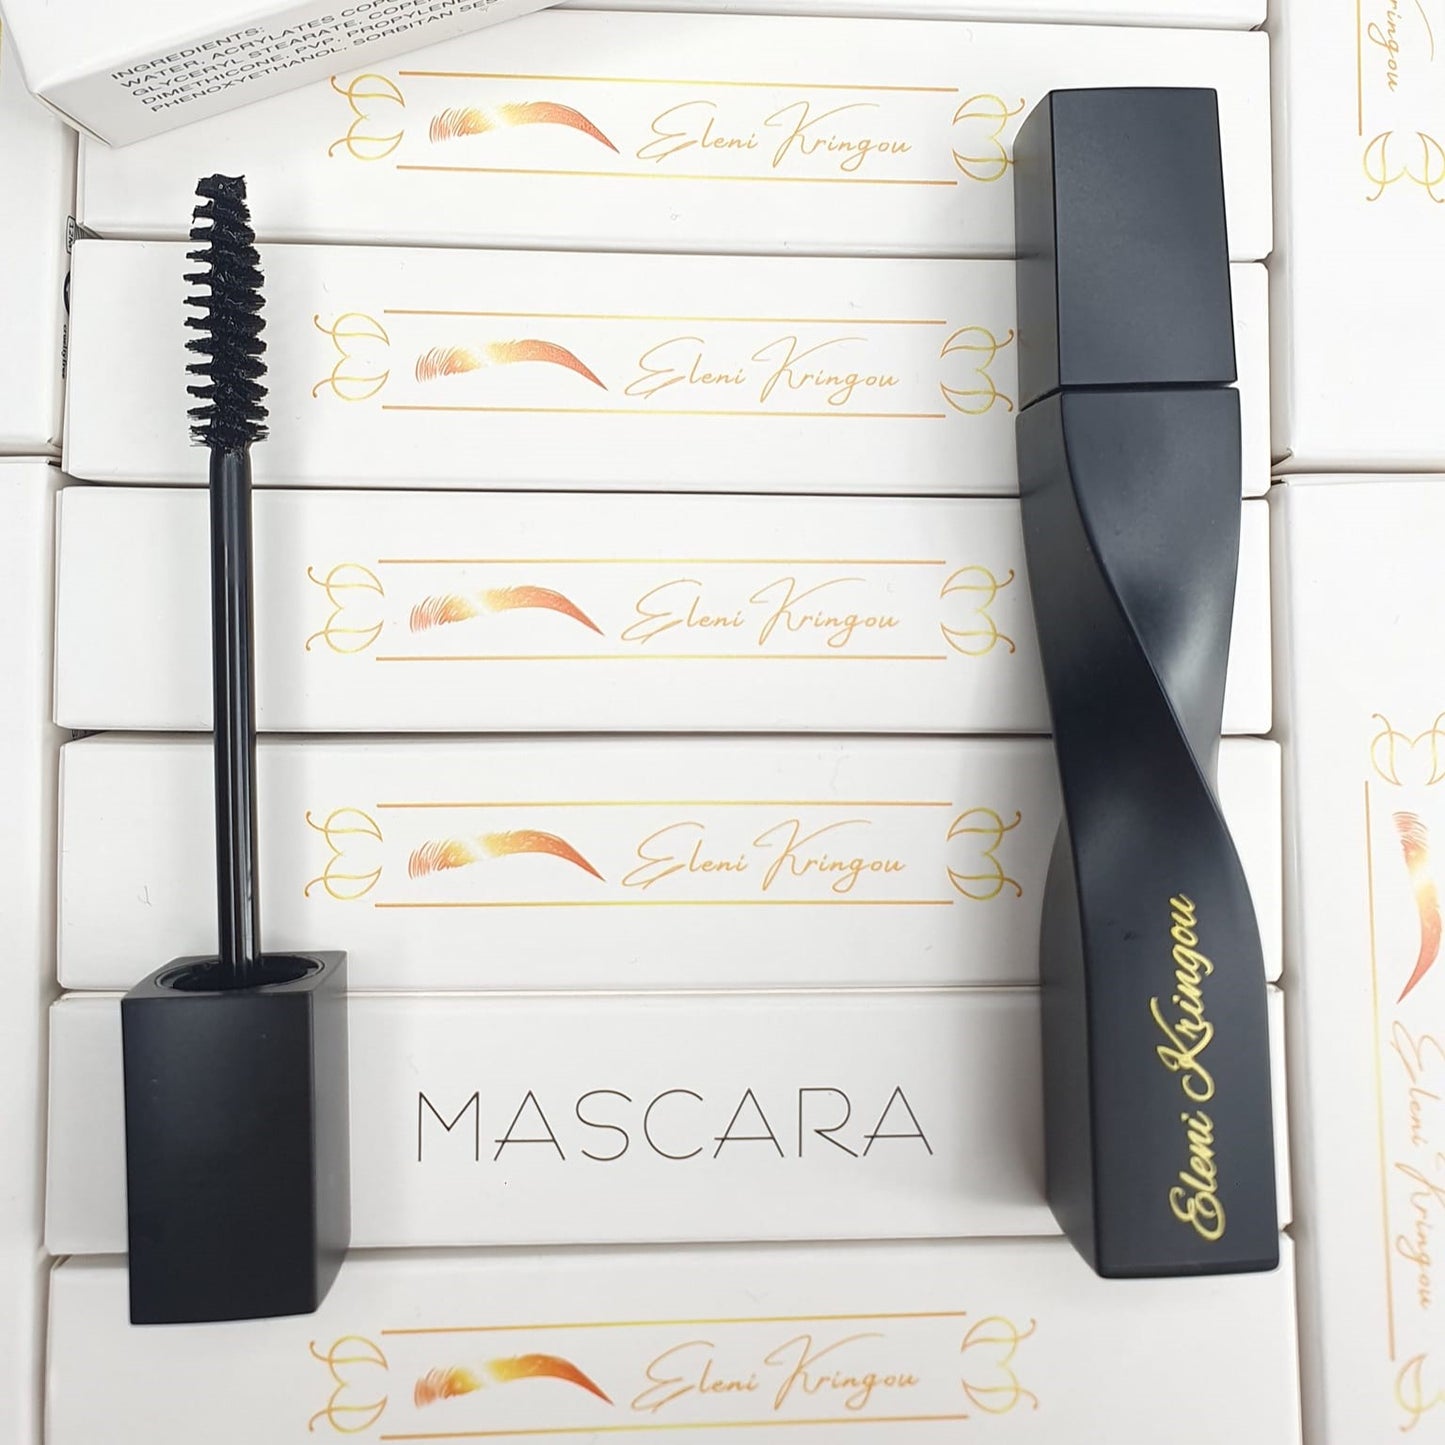 Mascara (Black) - Waterproof & Long Lasting